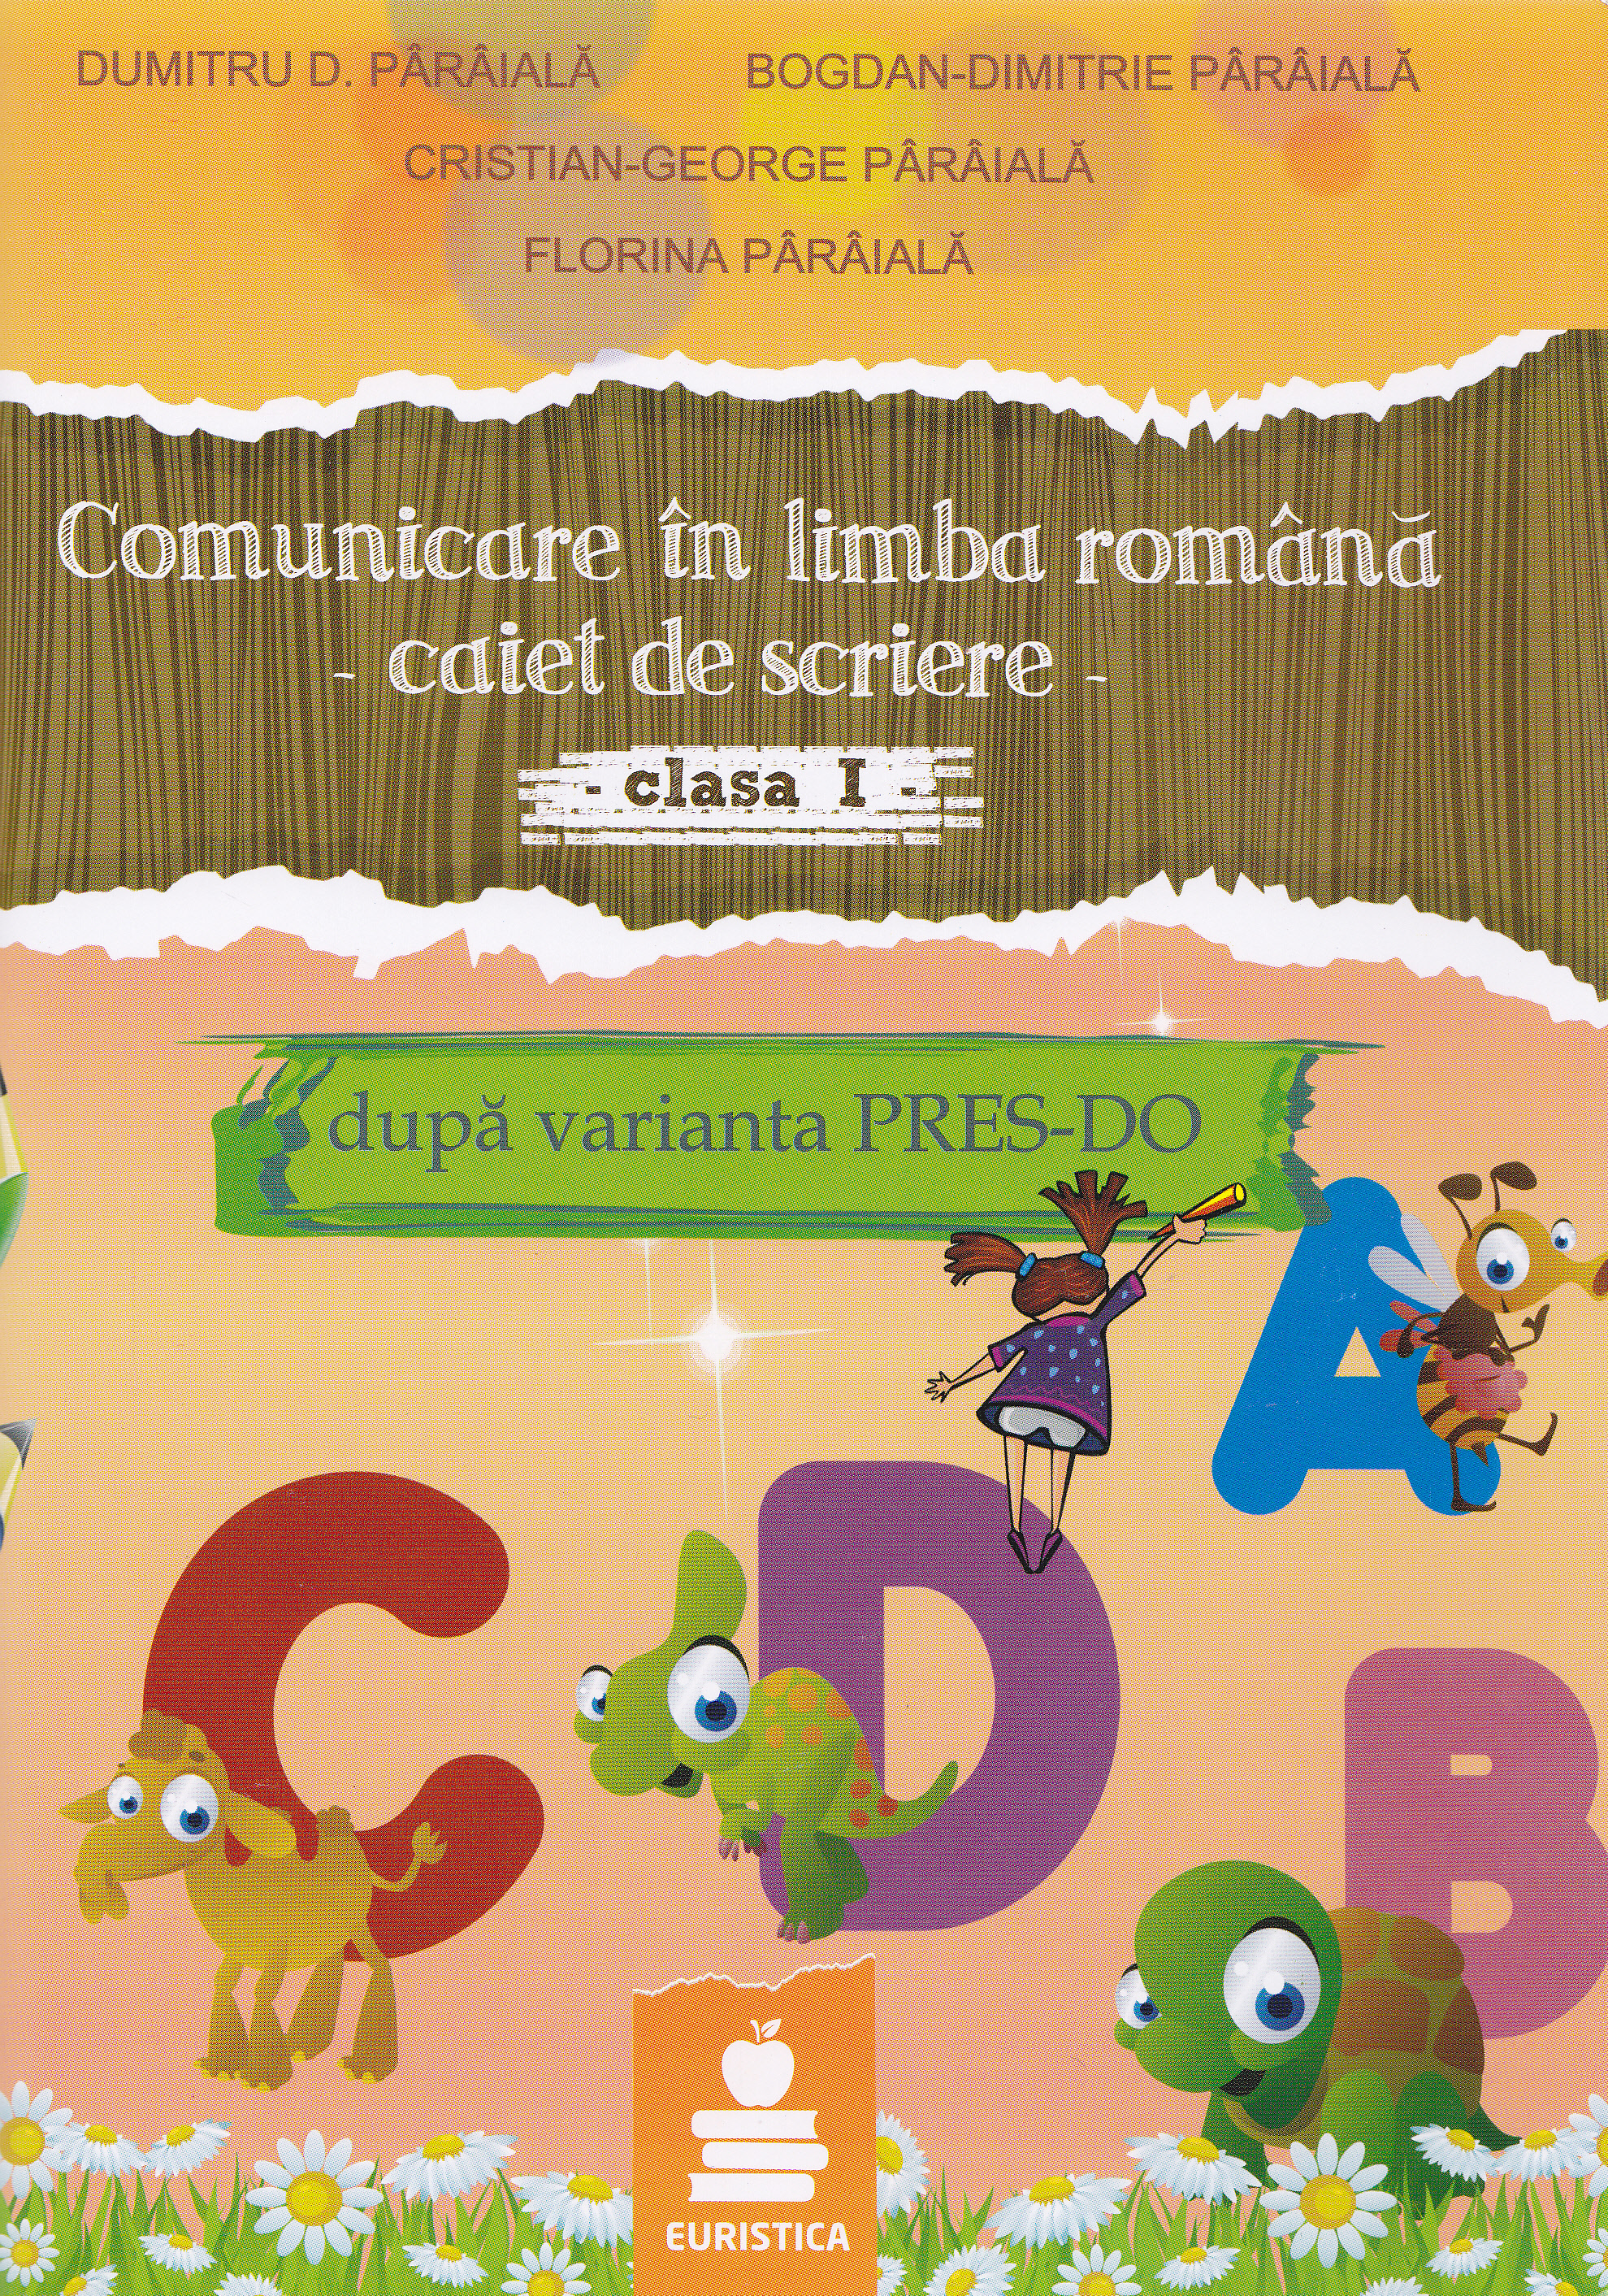 Comunicare in limba romana. Caiet de scriere clasa 1 dupa varianta PRES-DO ed.2015 - Dumitru D. Paraia